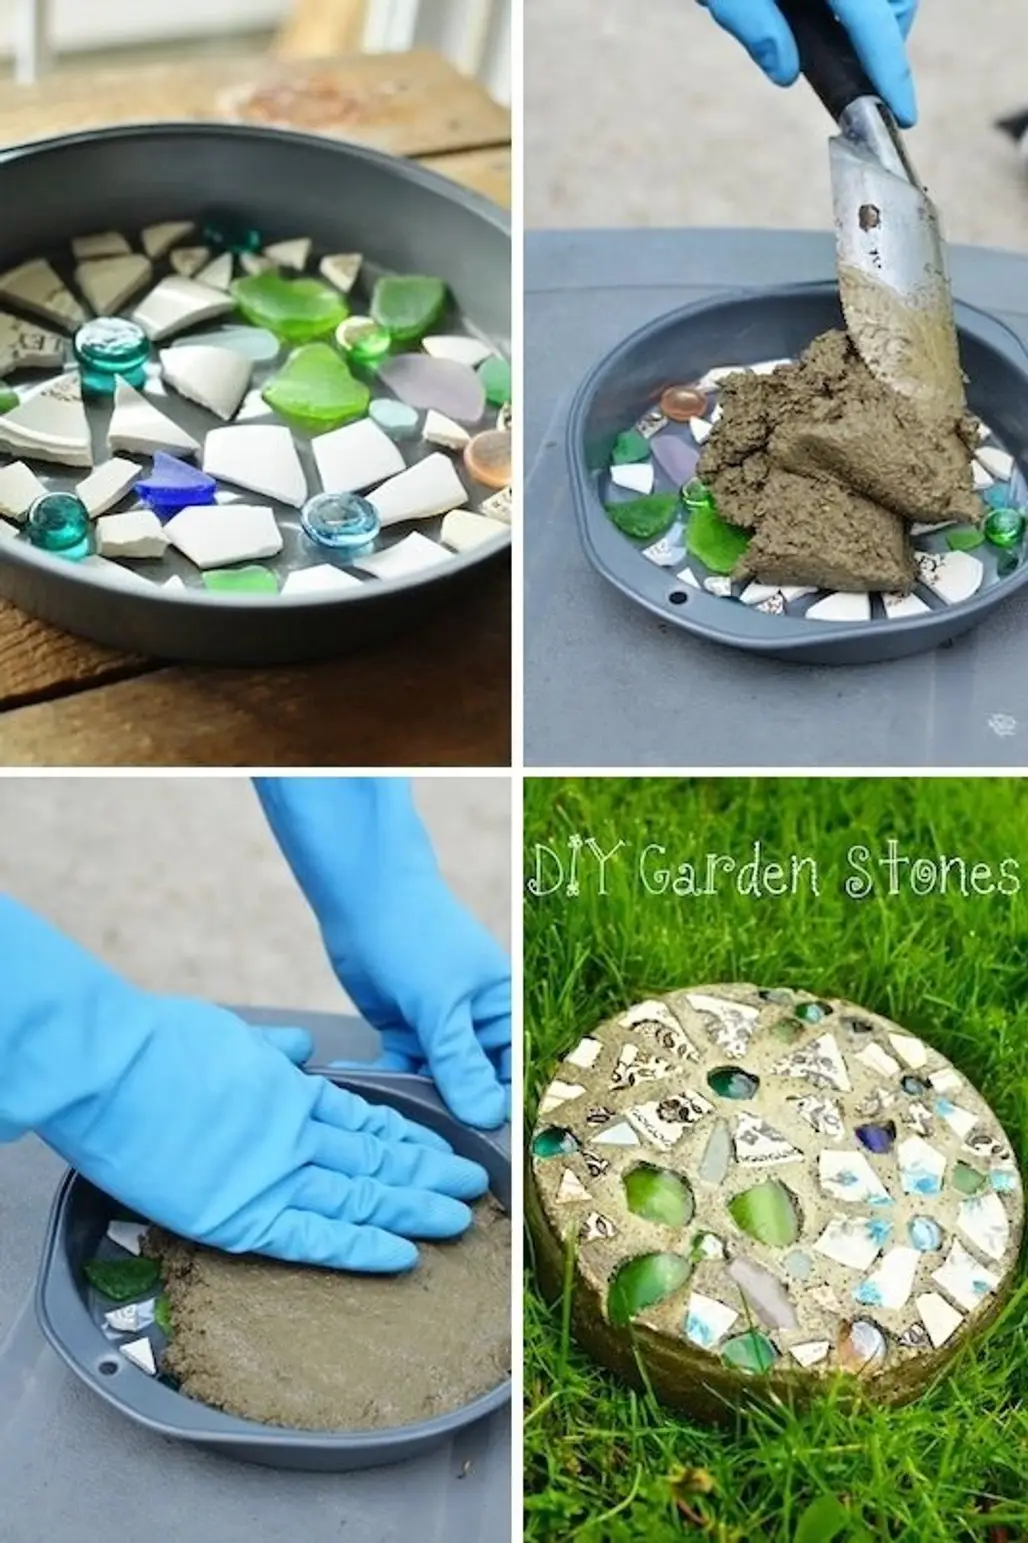 Assemble These Easy Garden Stones